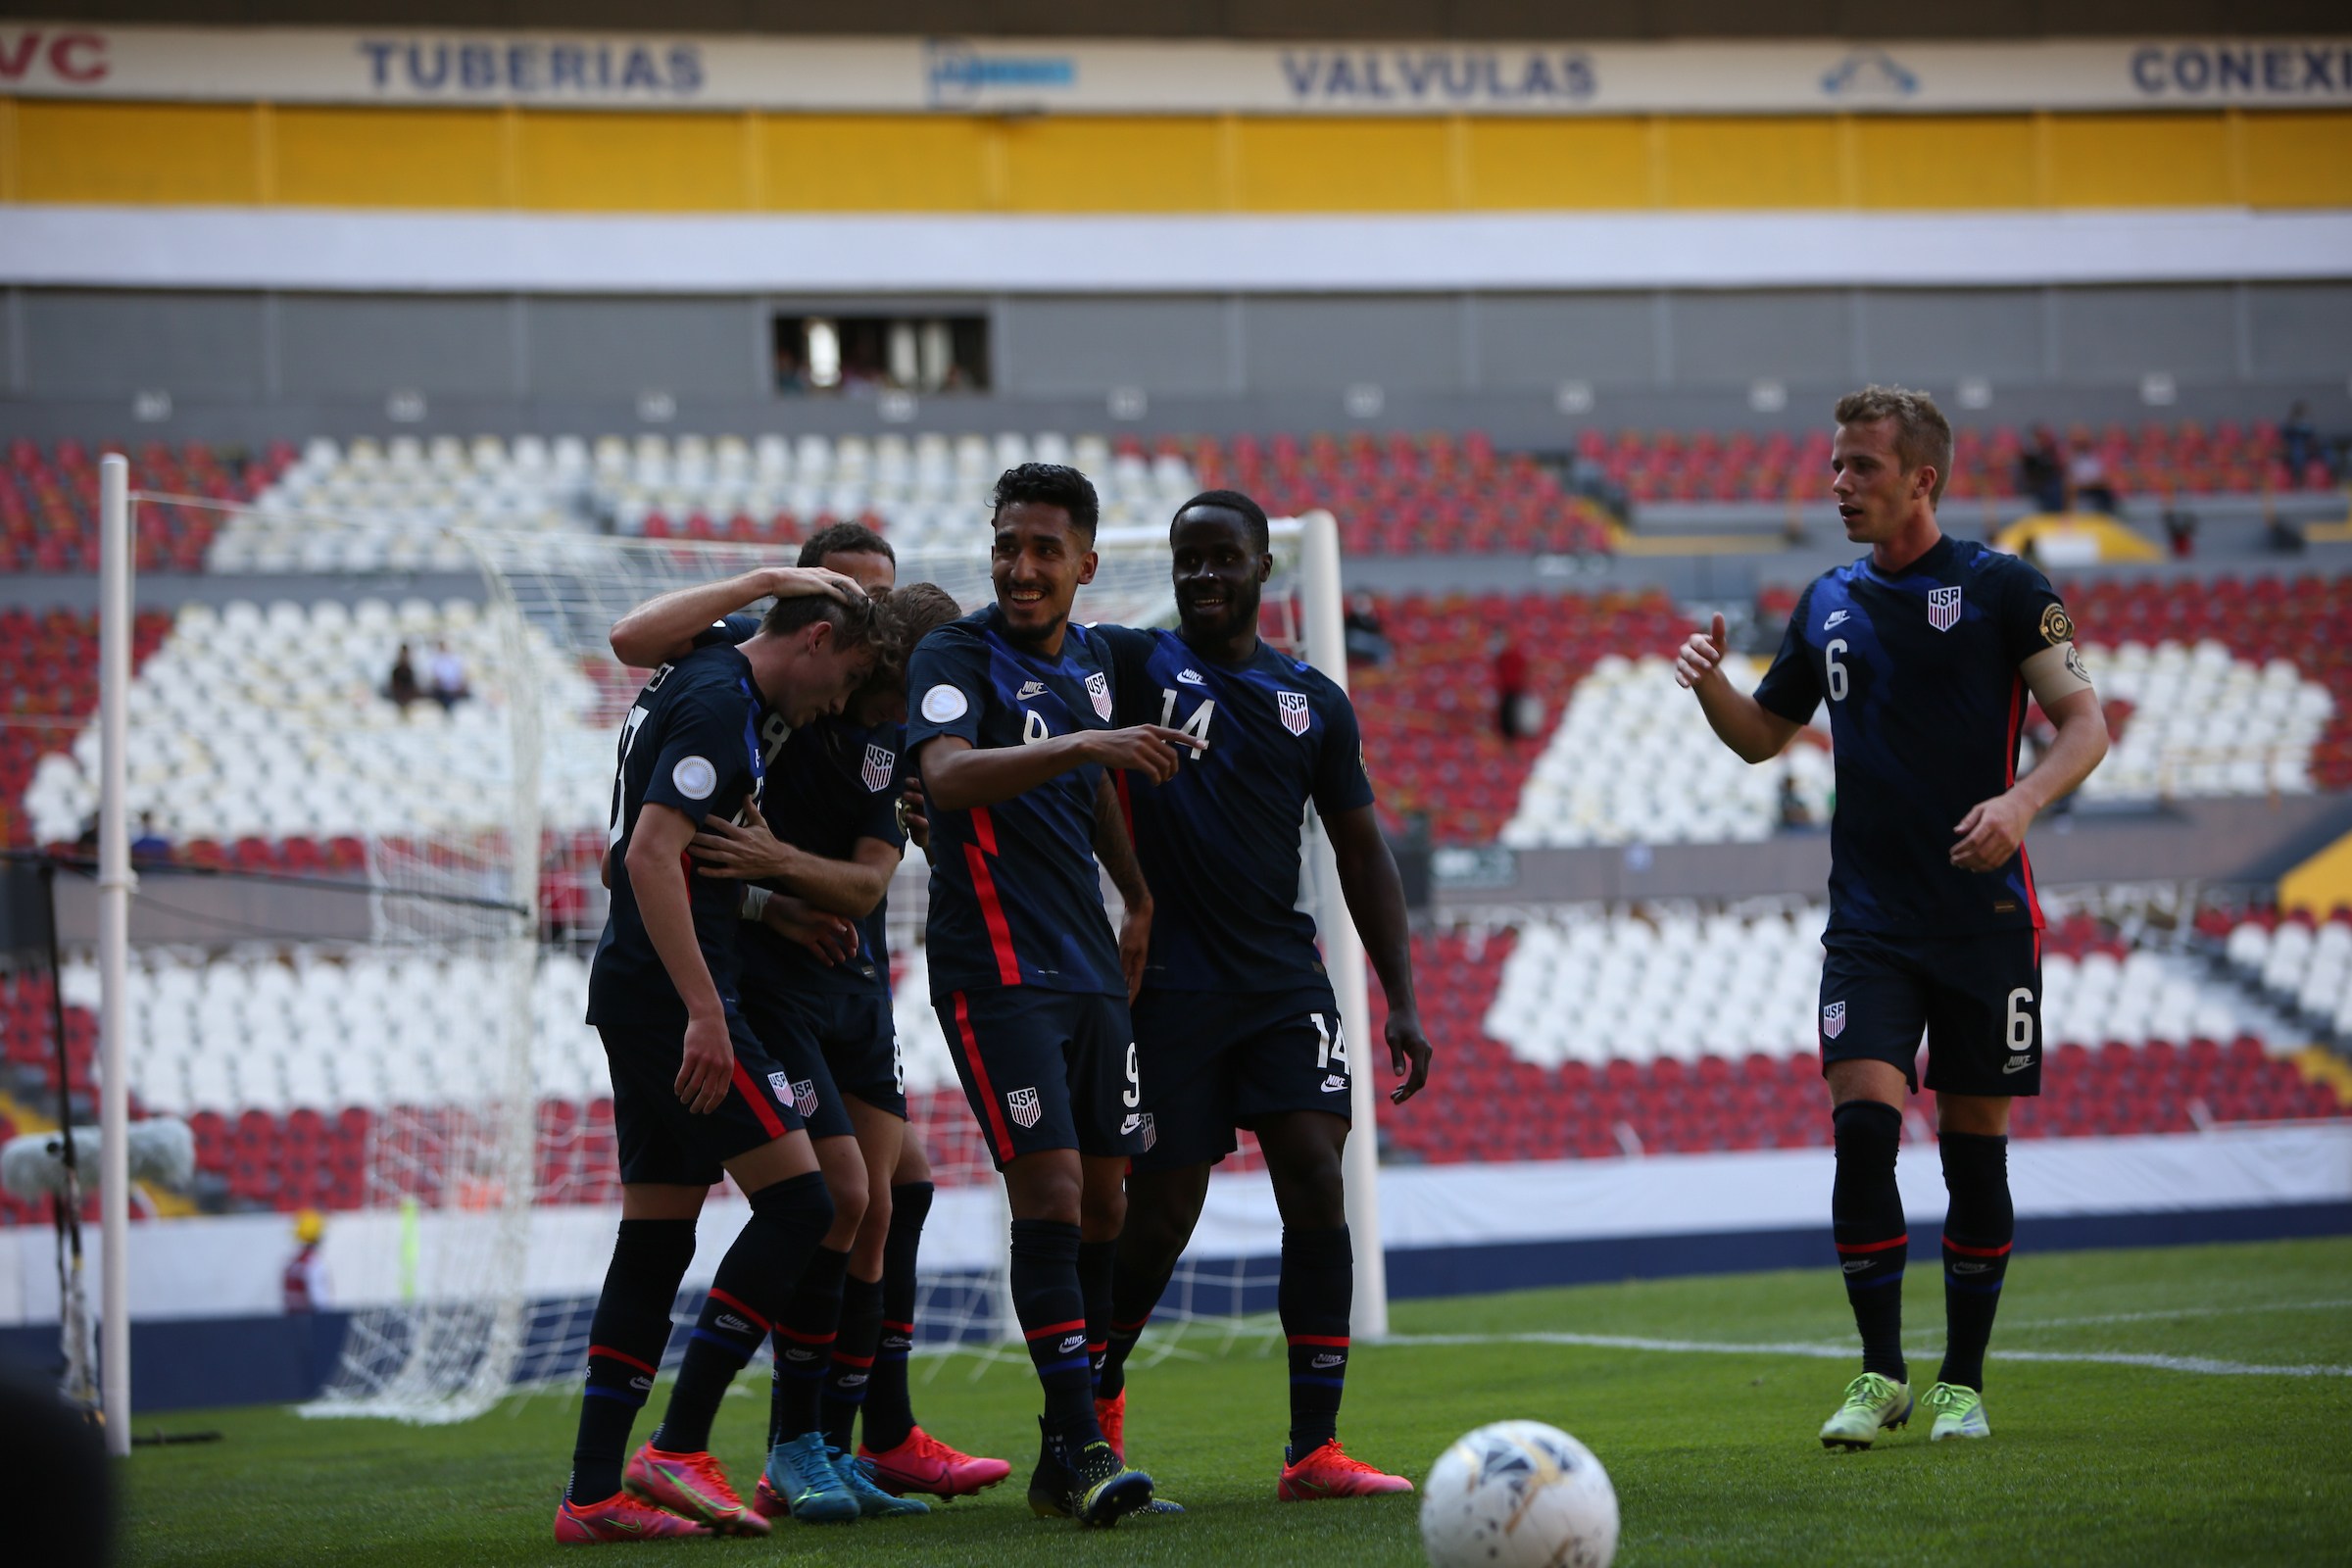 US U-23 1, Costa Rica U-23 0 - Olympic Qualifying Match Recap - MLSSoccer.com